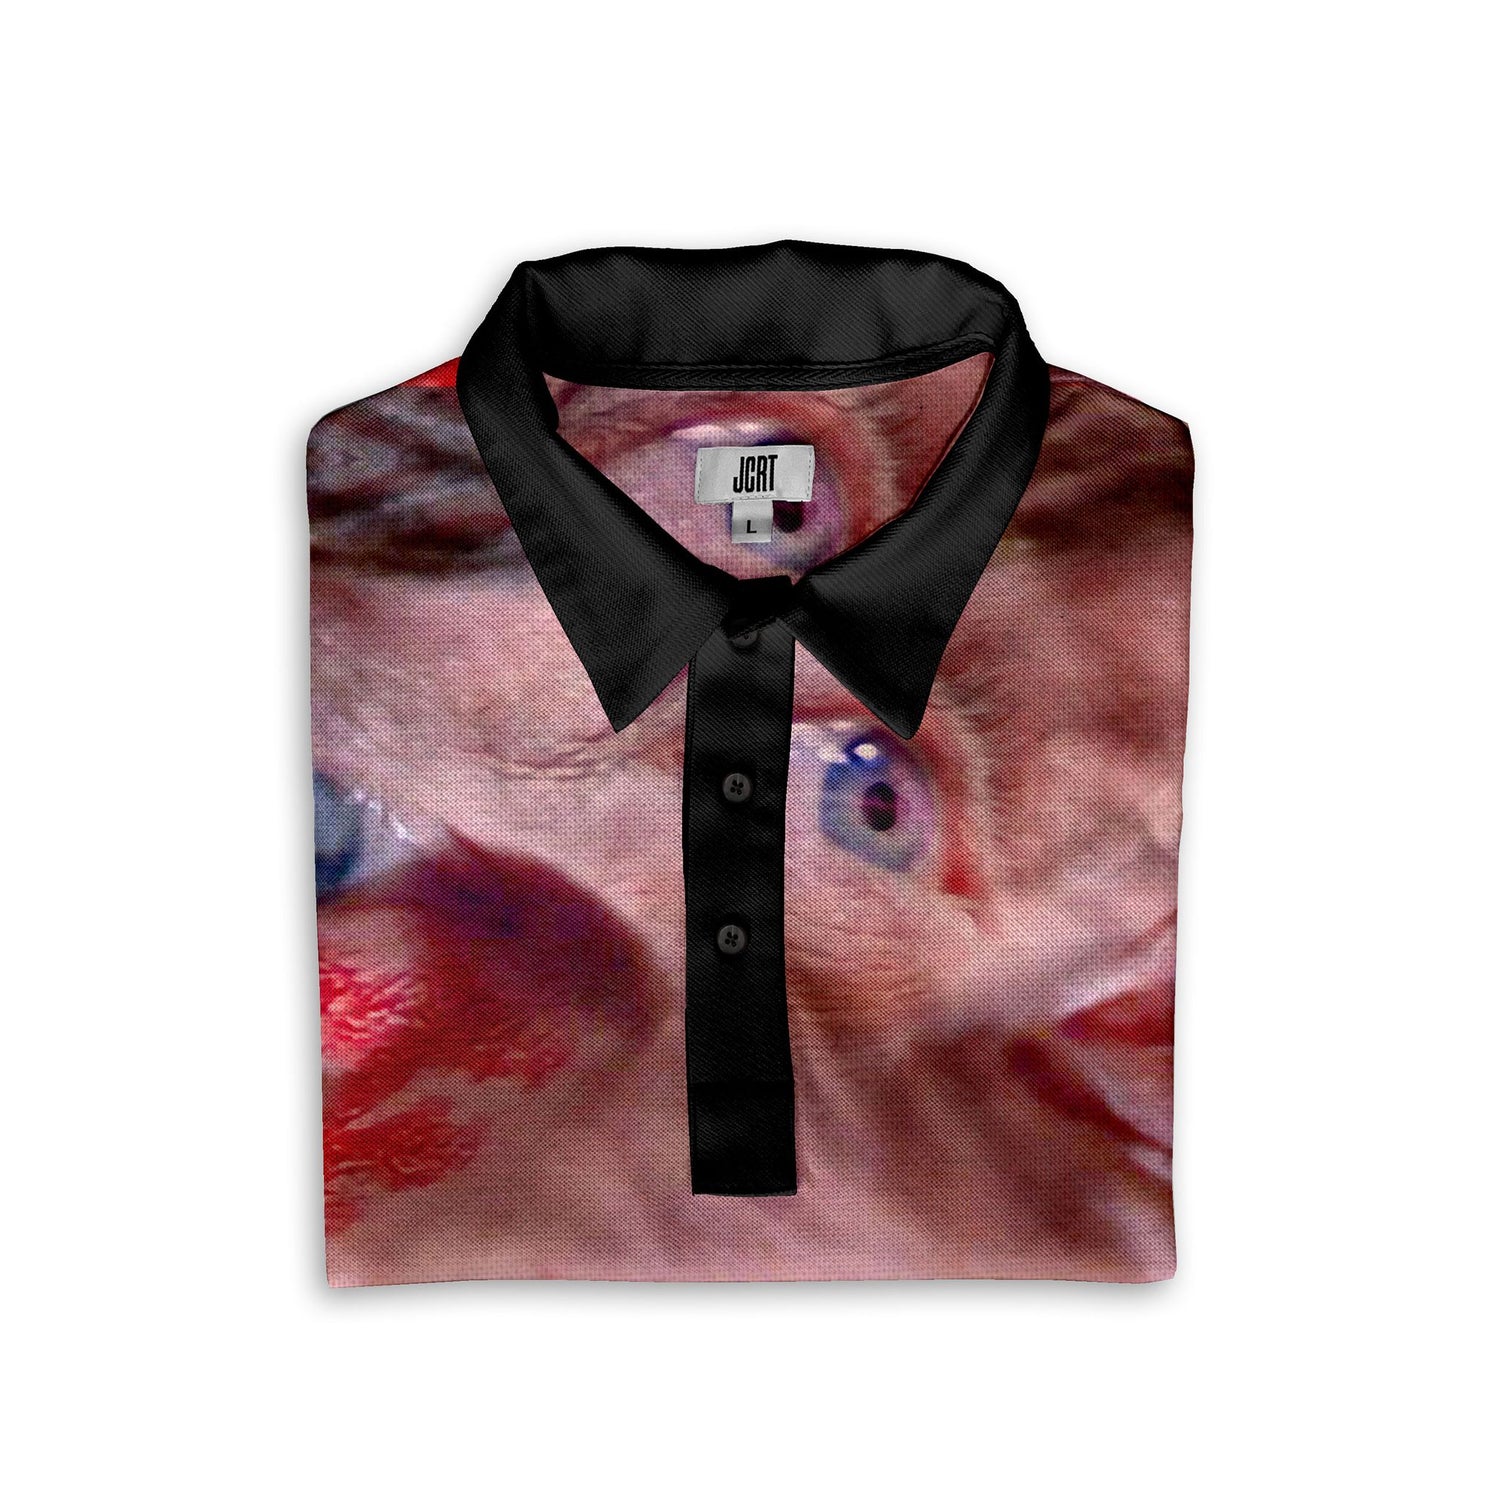 The Clockwork Suspiria Exquisite Corpse Polo Shirt